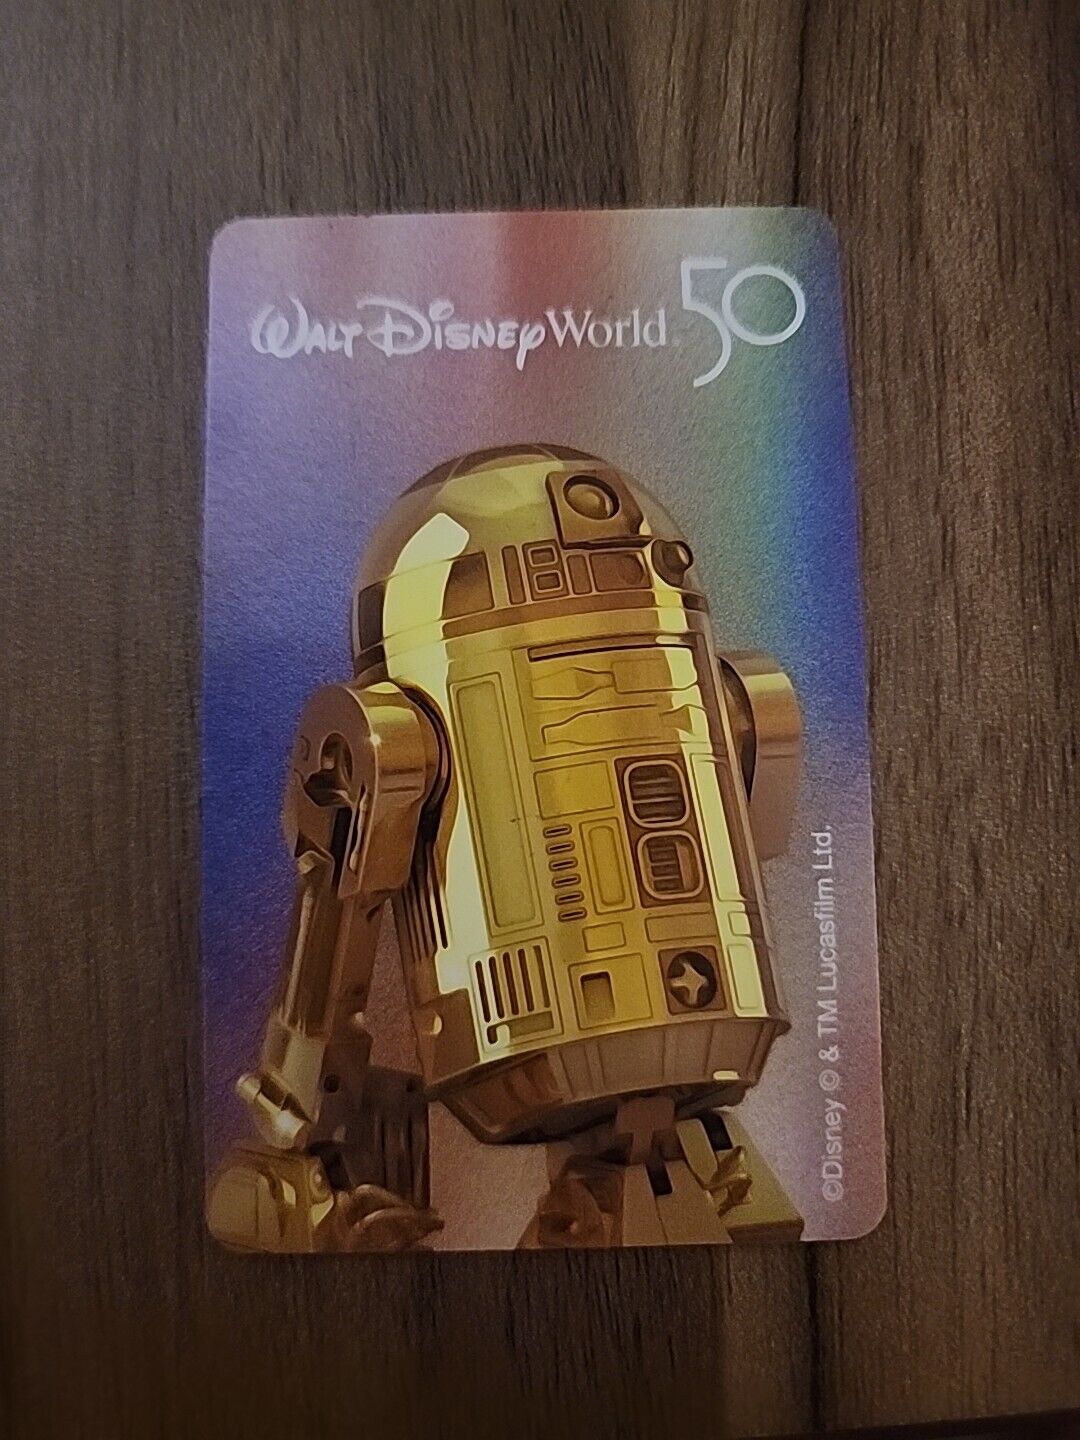 RARE Star Wars GOLD R2D2 Disney World 50th Anniversary Gate Ticket Entry Card